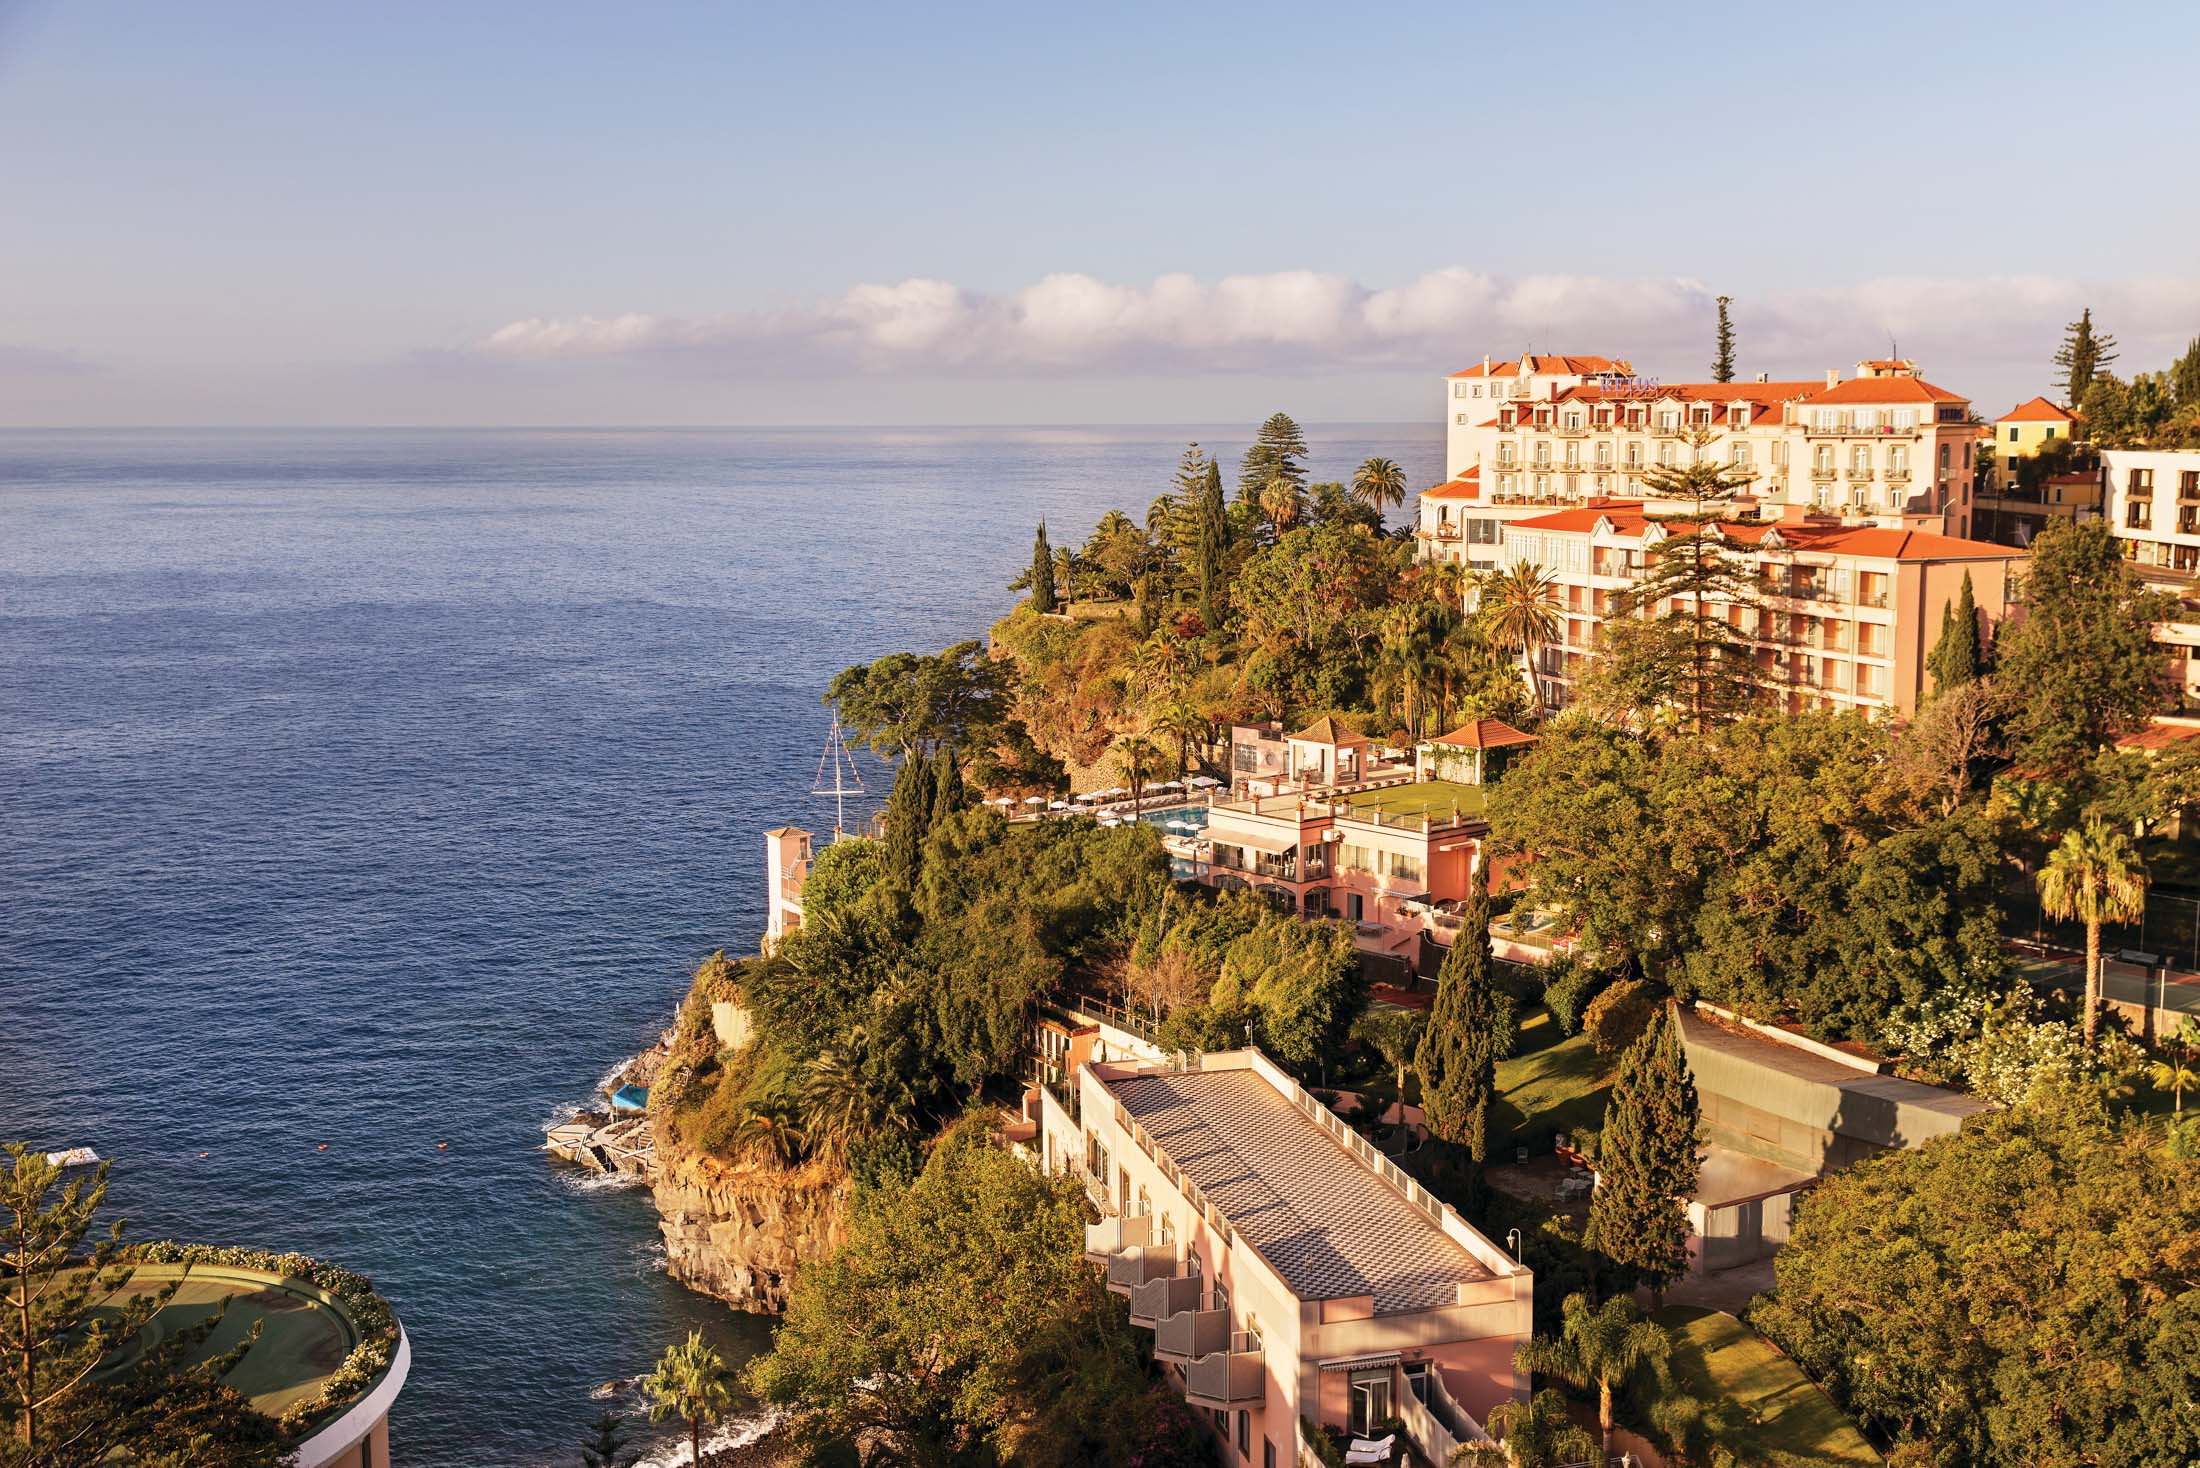 Madeira Travel Guide: A Lush Ecosystem, Adventure, Wine Make It